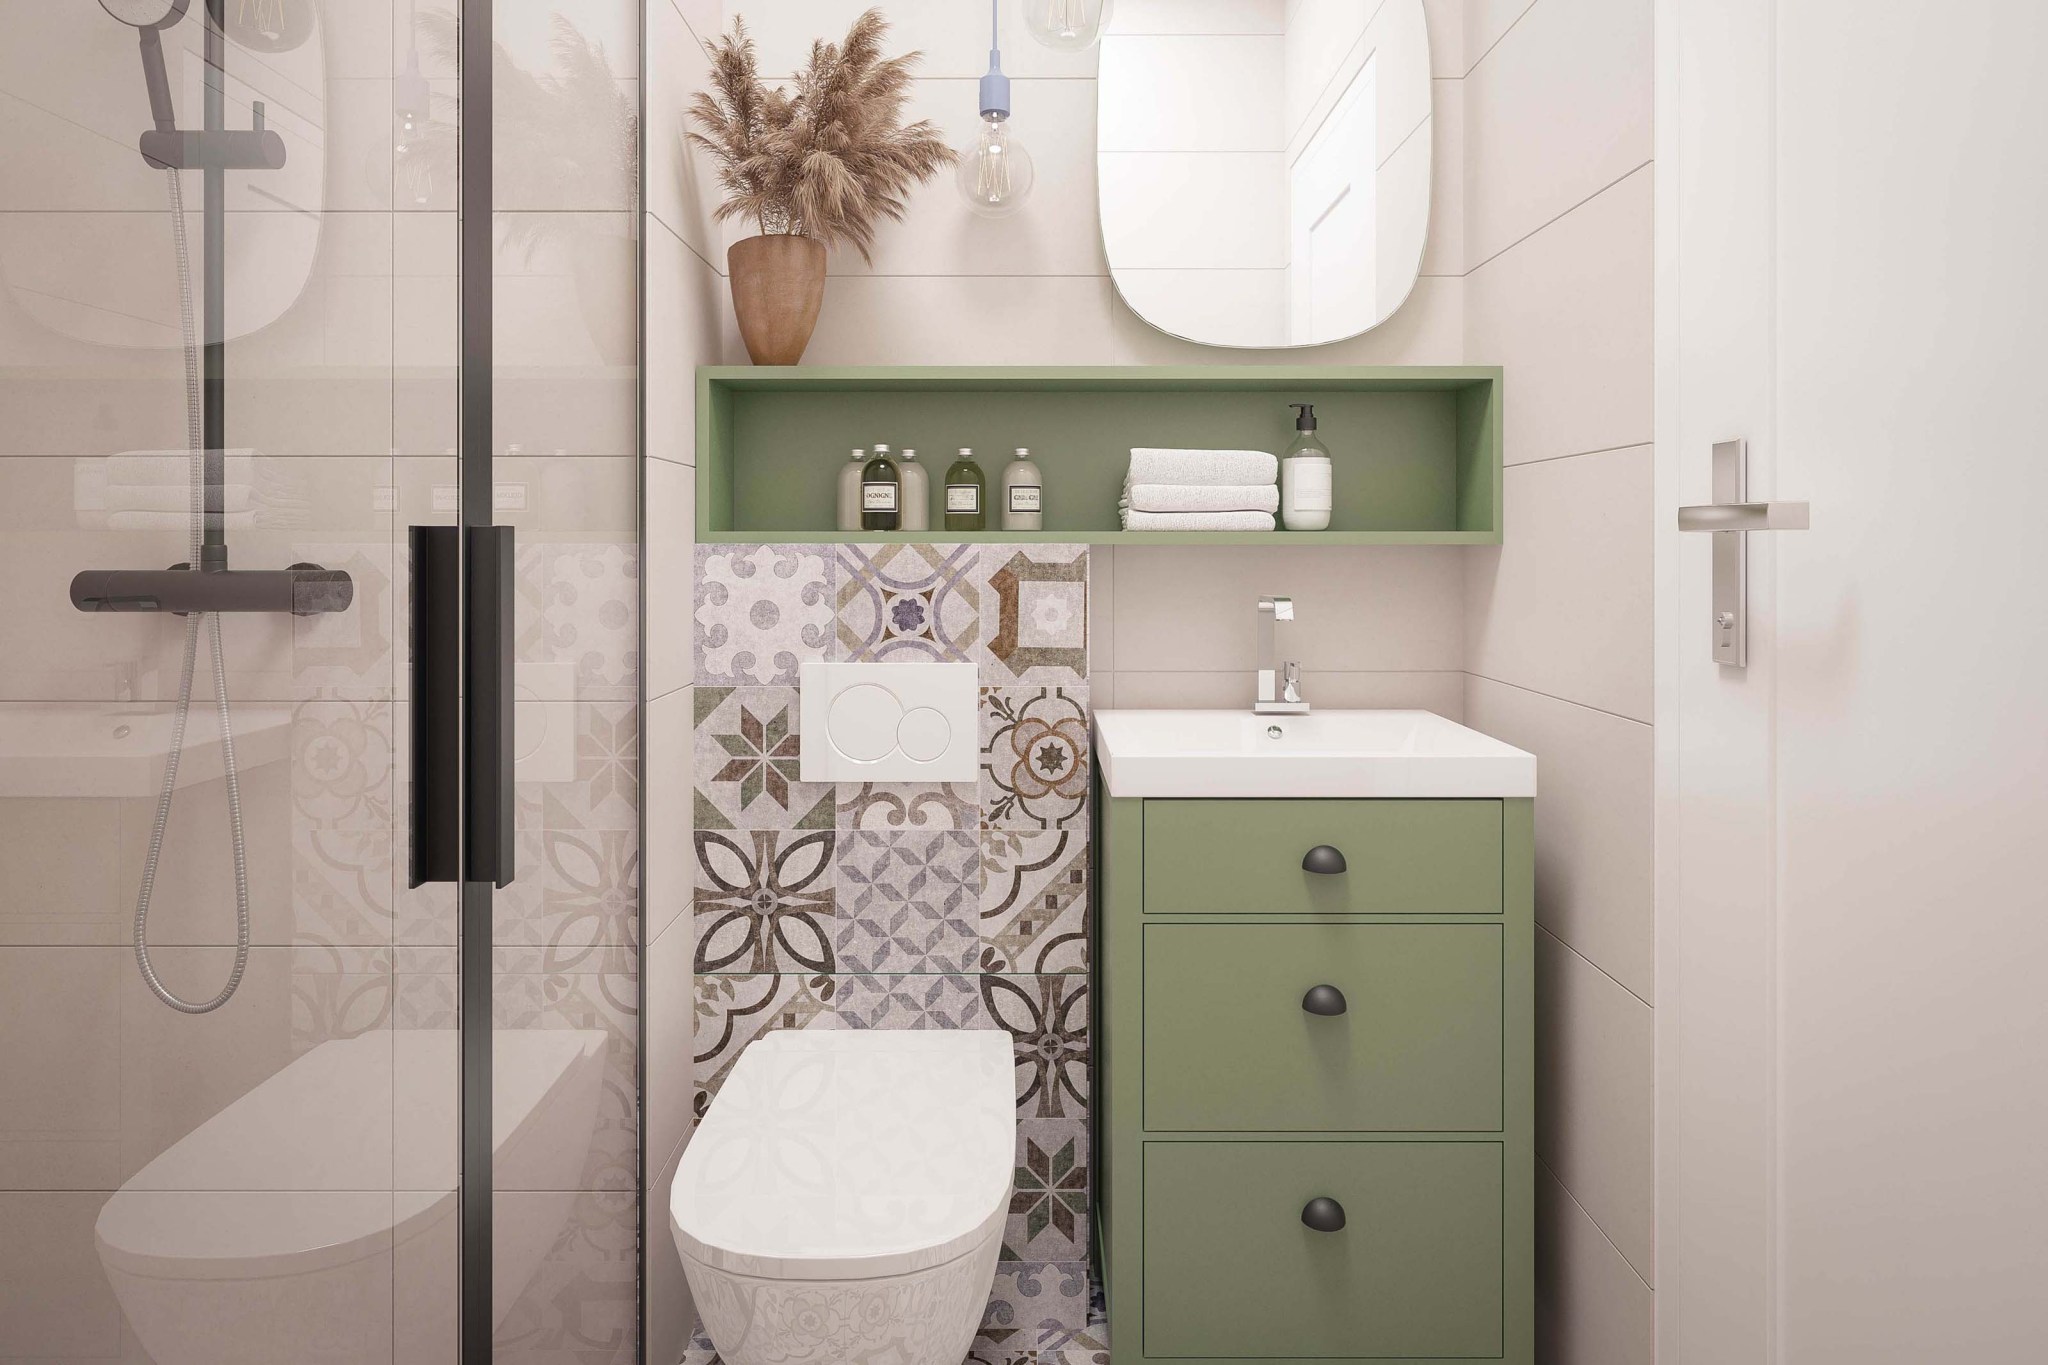 Easy Fit Toilet-Top Bathroom Shelf